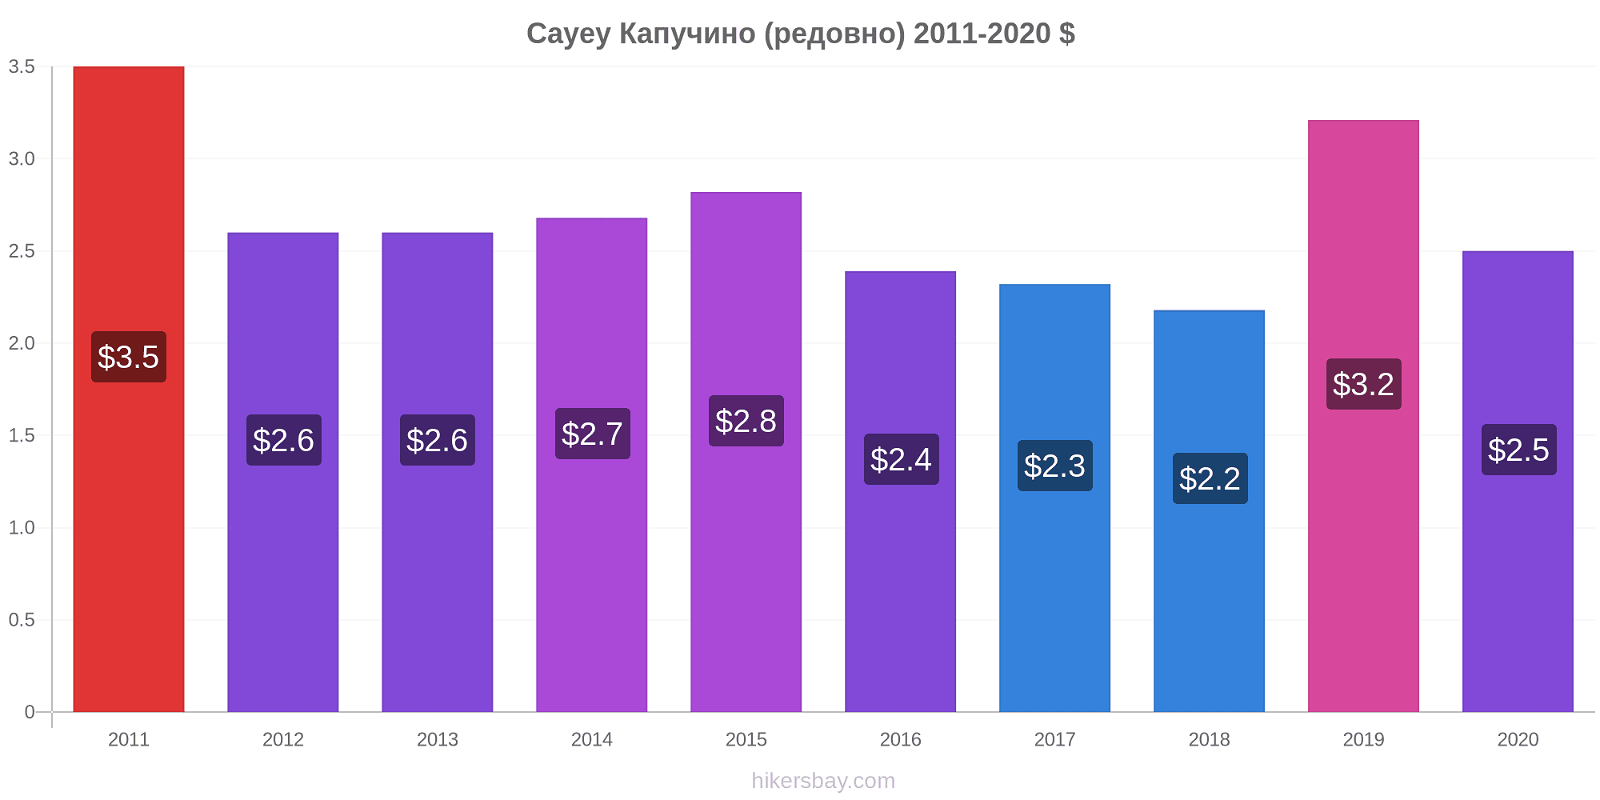 Cayey ценови промени Капучино (редовно) hikersbay.com